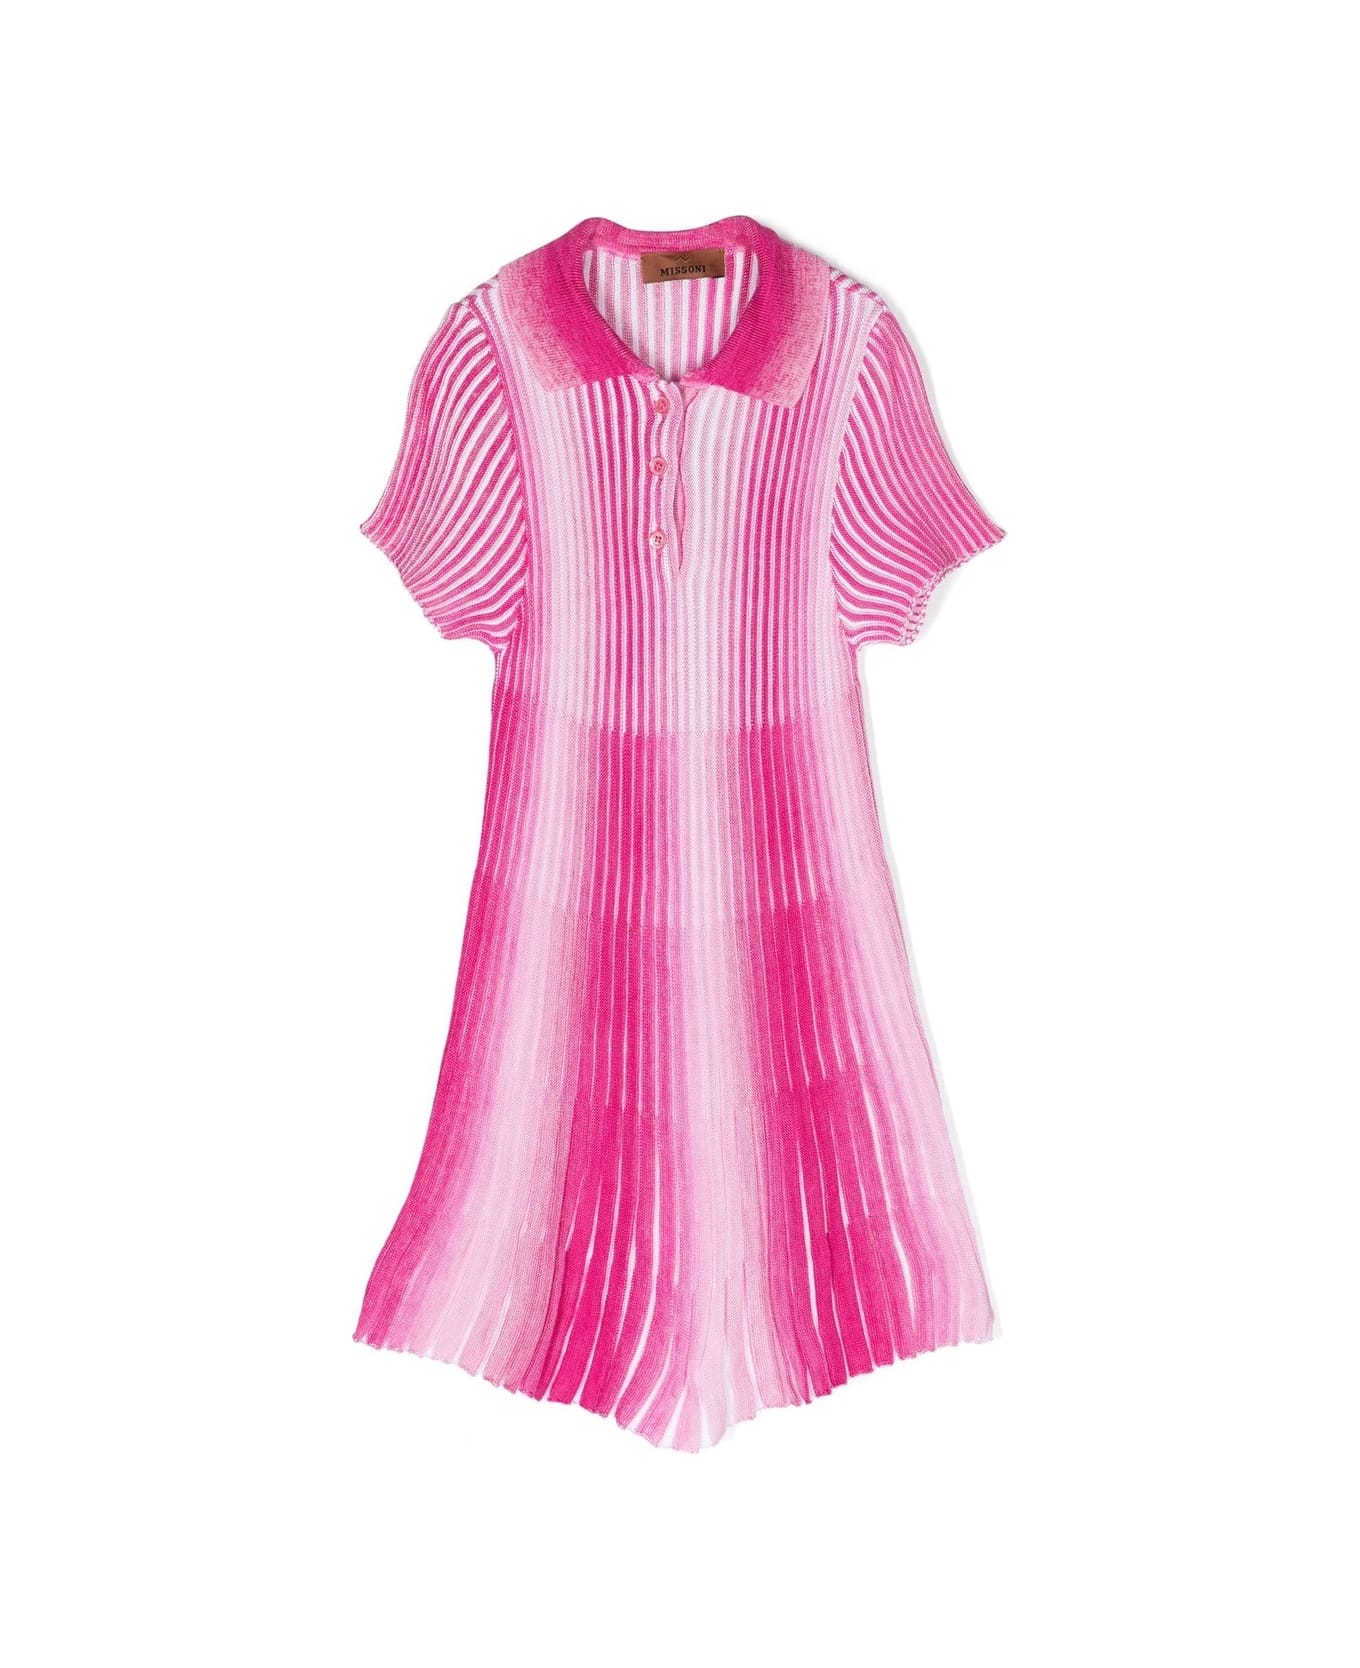 Missoni Kids Pink Striped Laminated Knit Dress - Pink